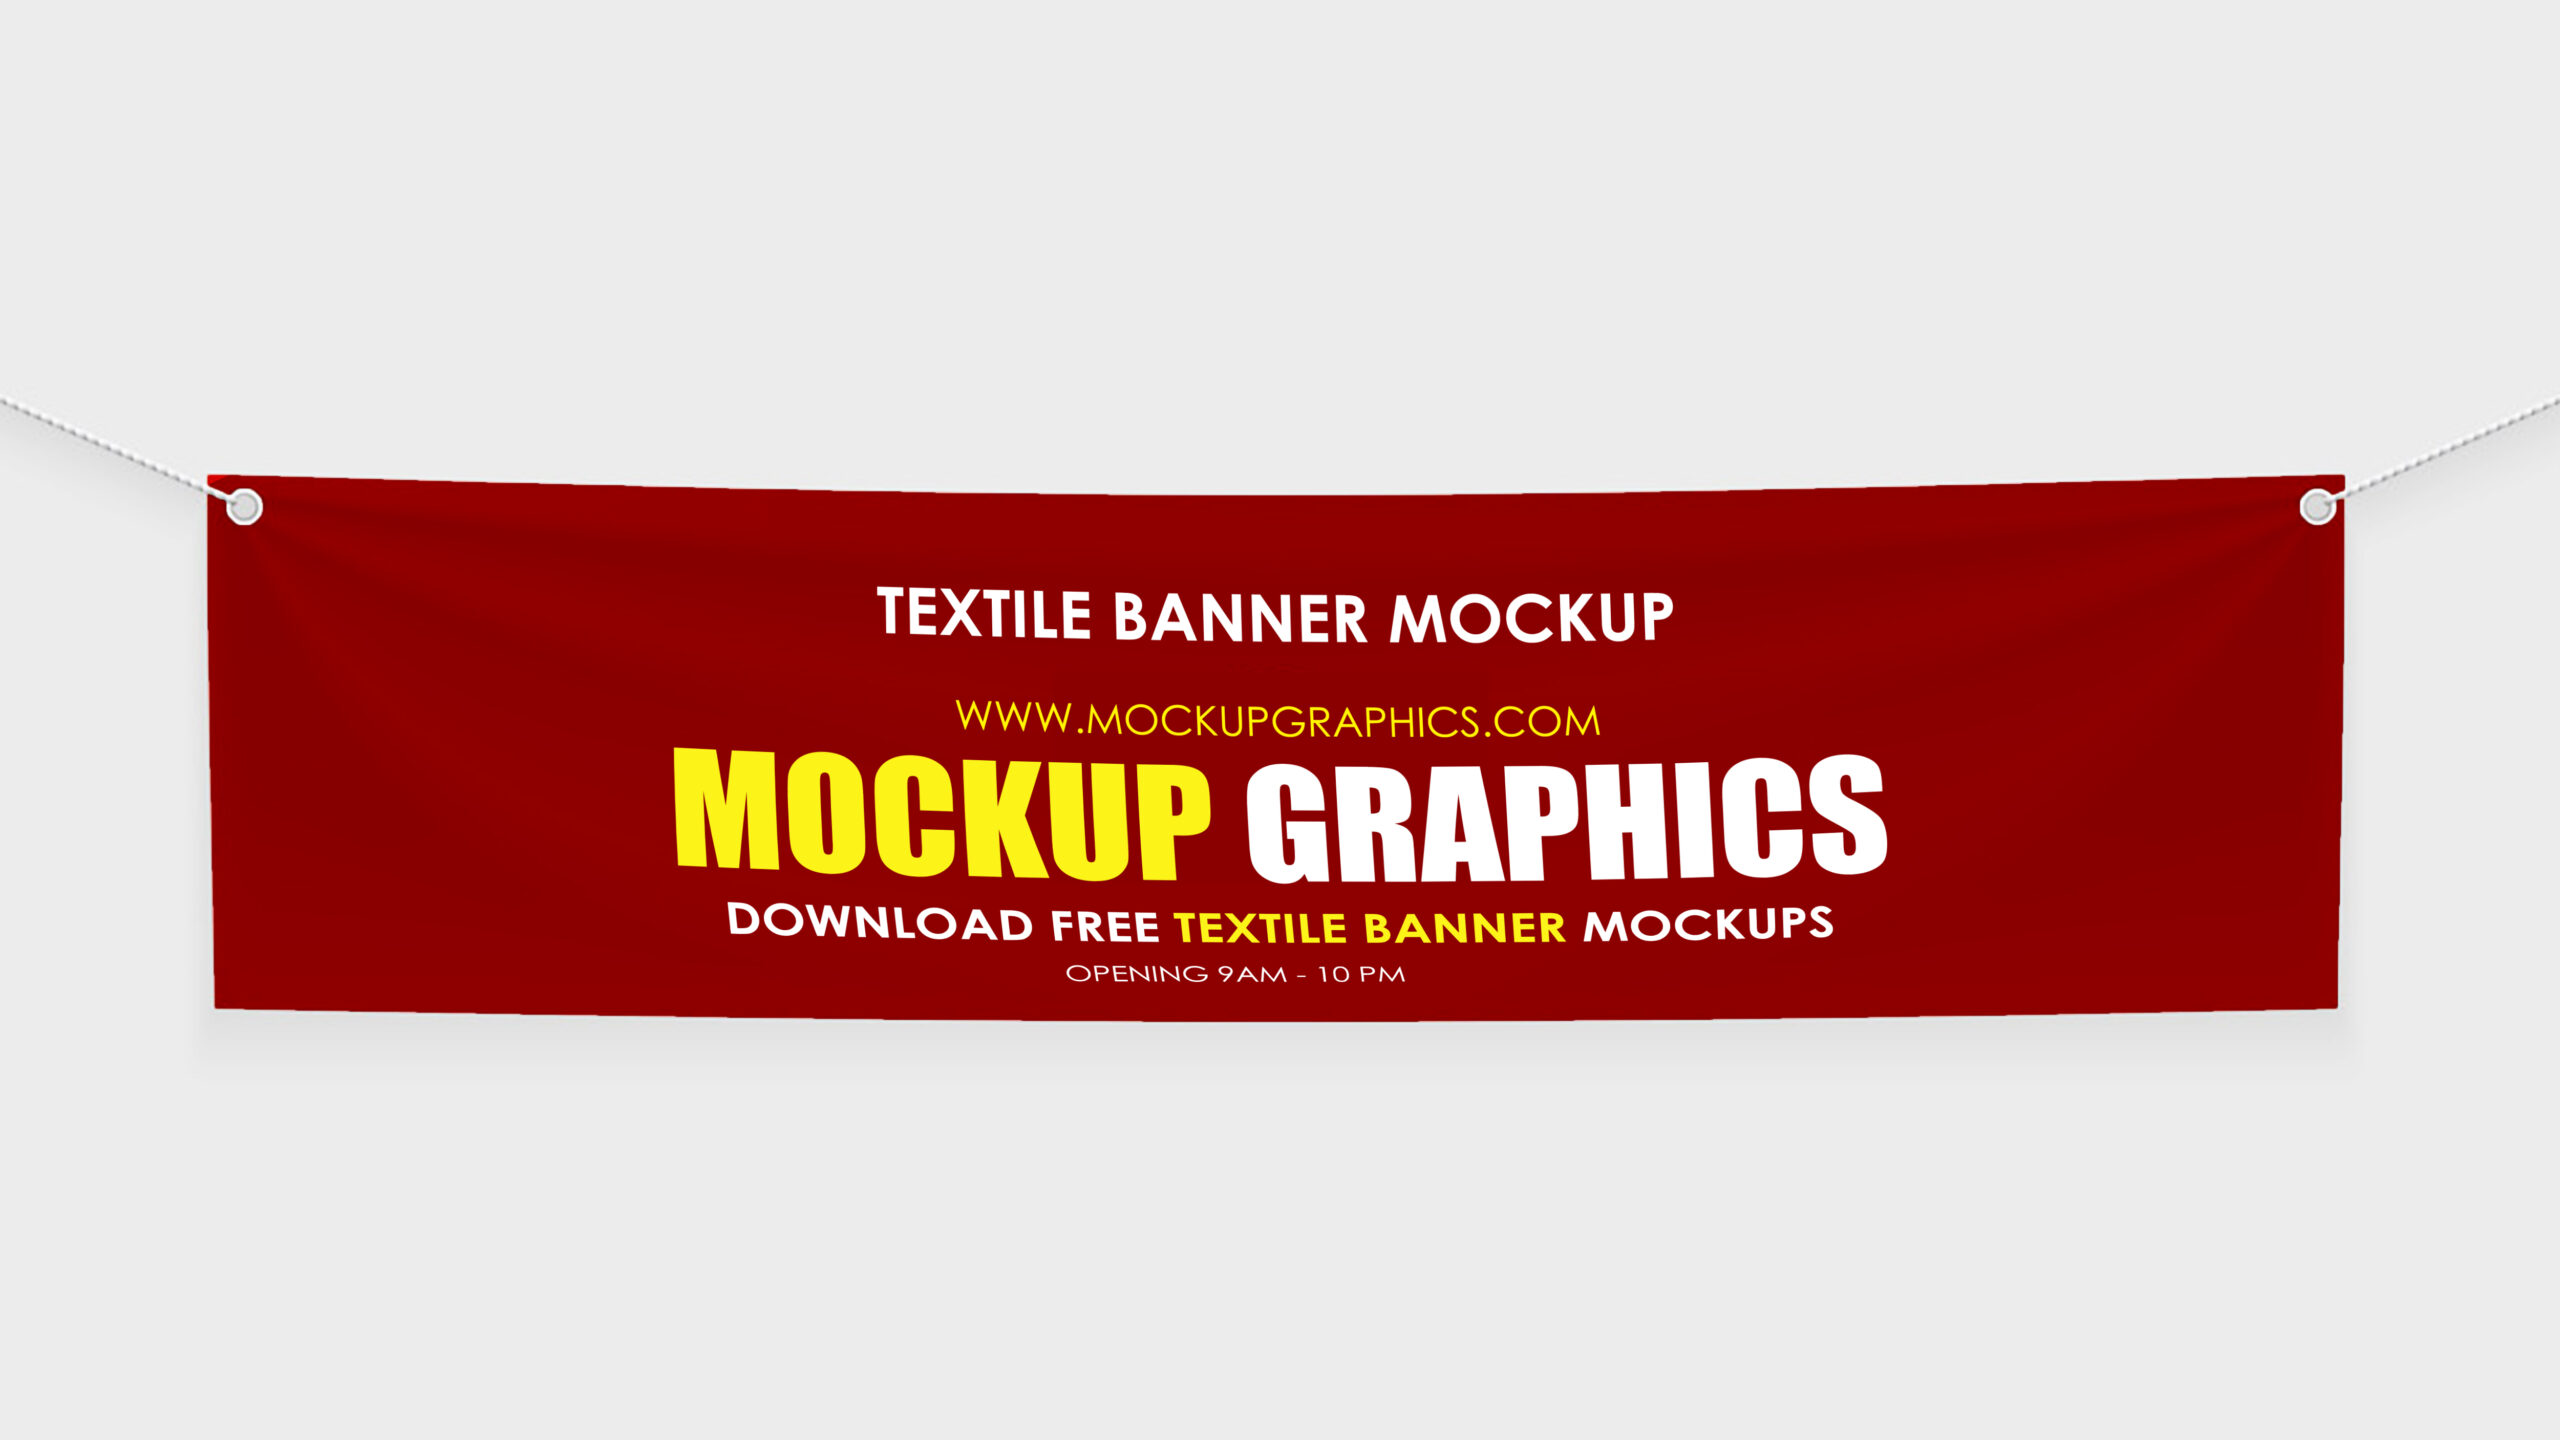 free psd textile banner mockup - www.mockupgraphics.com